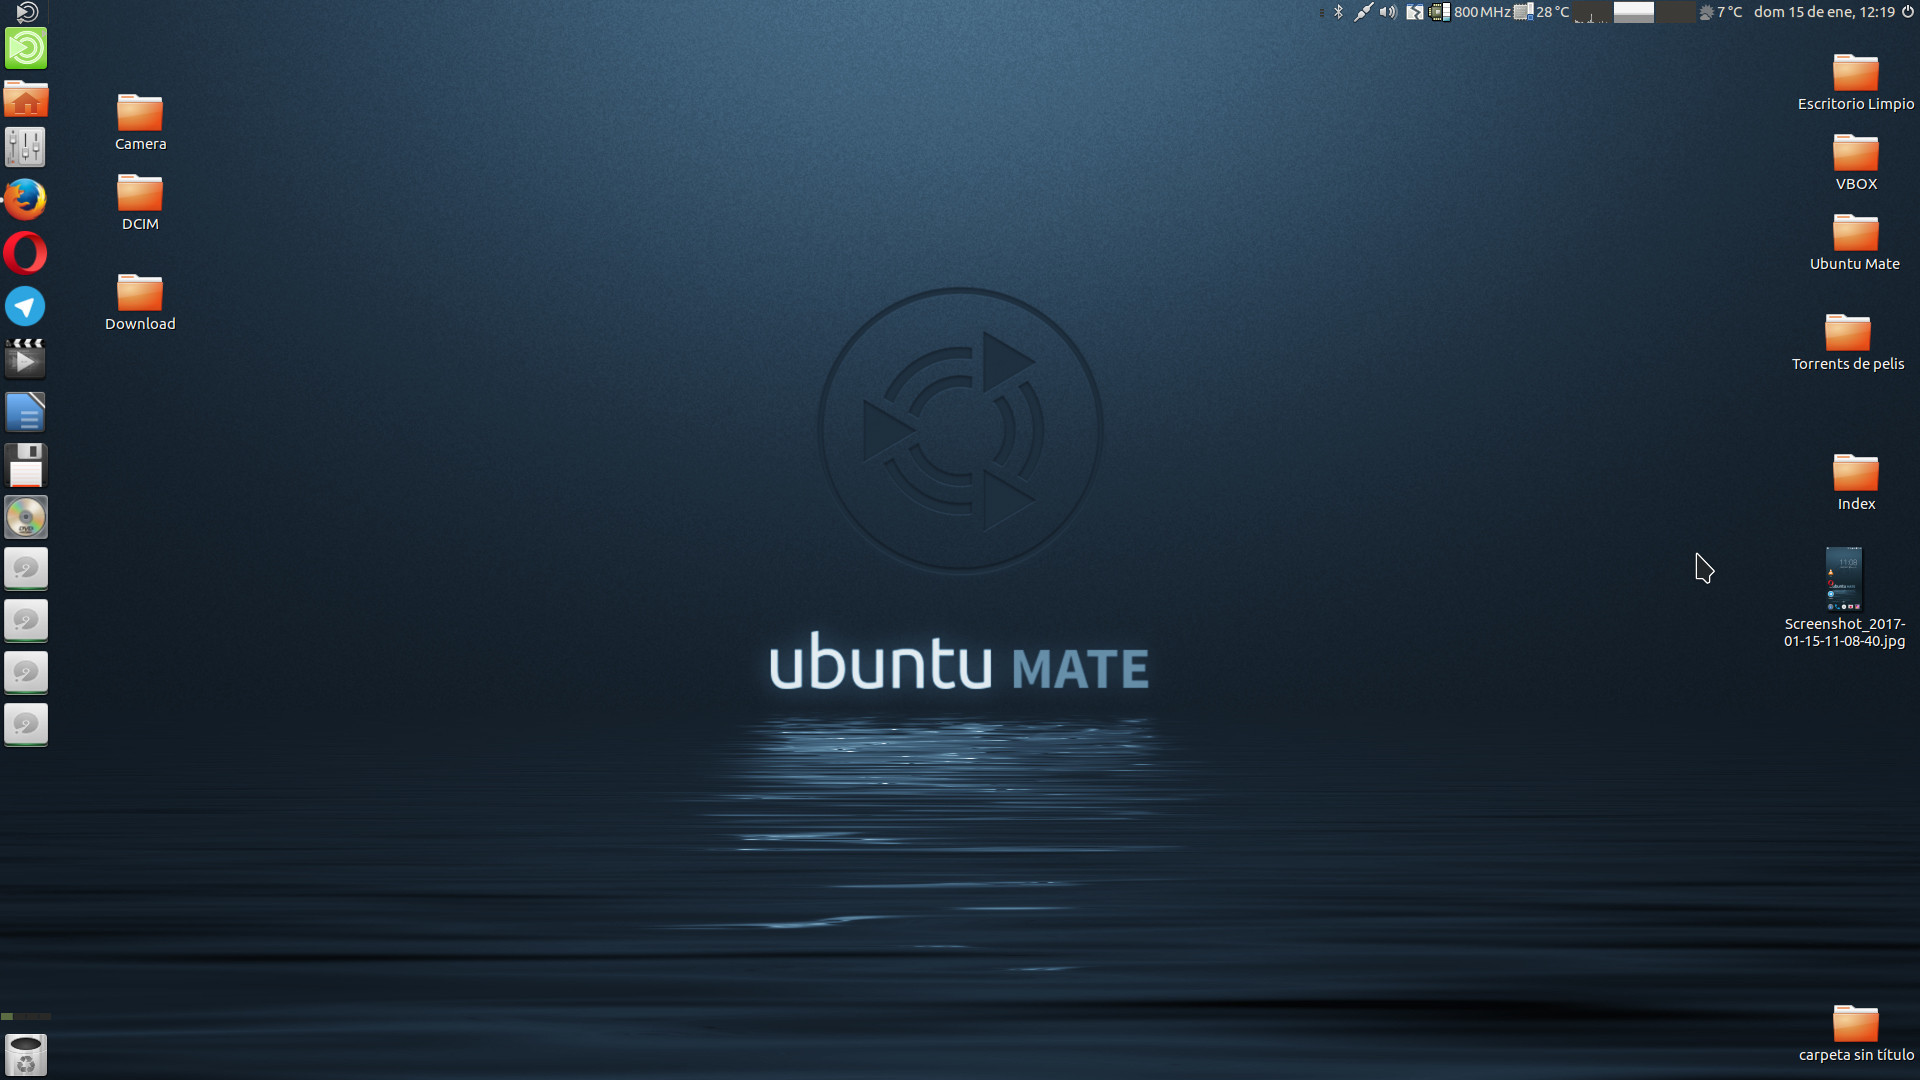 X2mate com. Mate Linux. Ubuntu Mate. Linux Ubuntu Mate. Рабочий стол Mate.